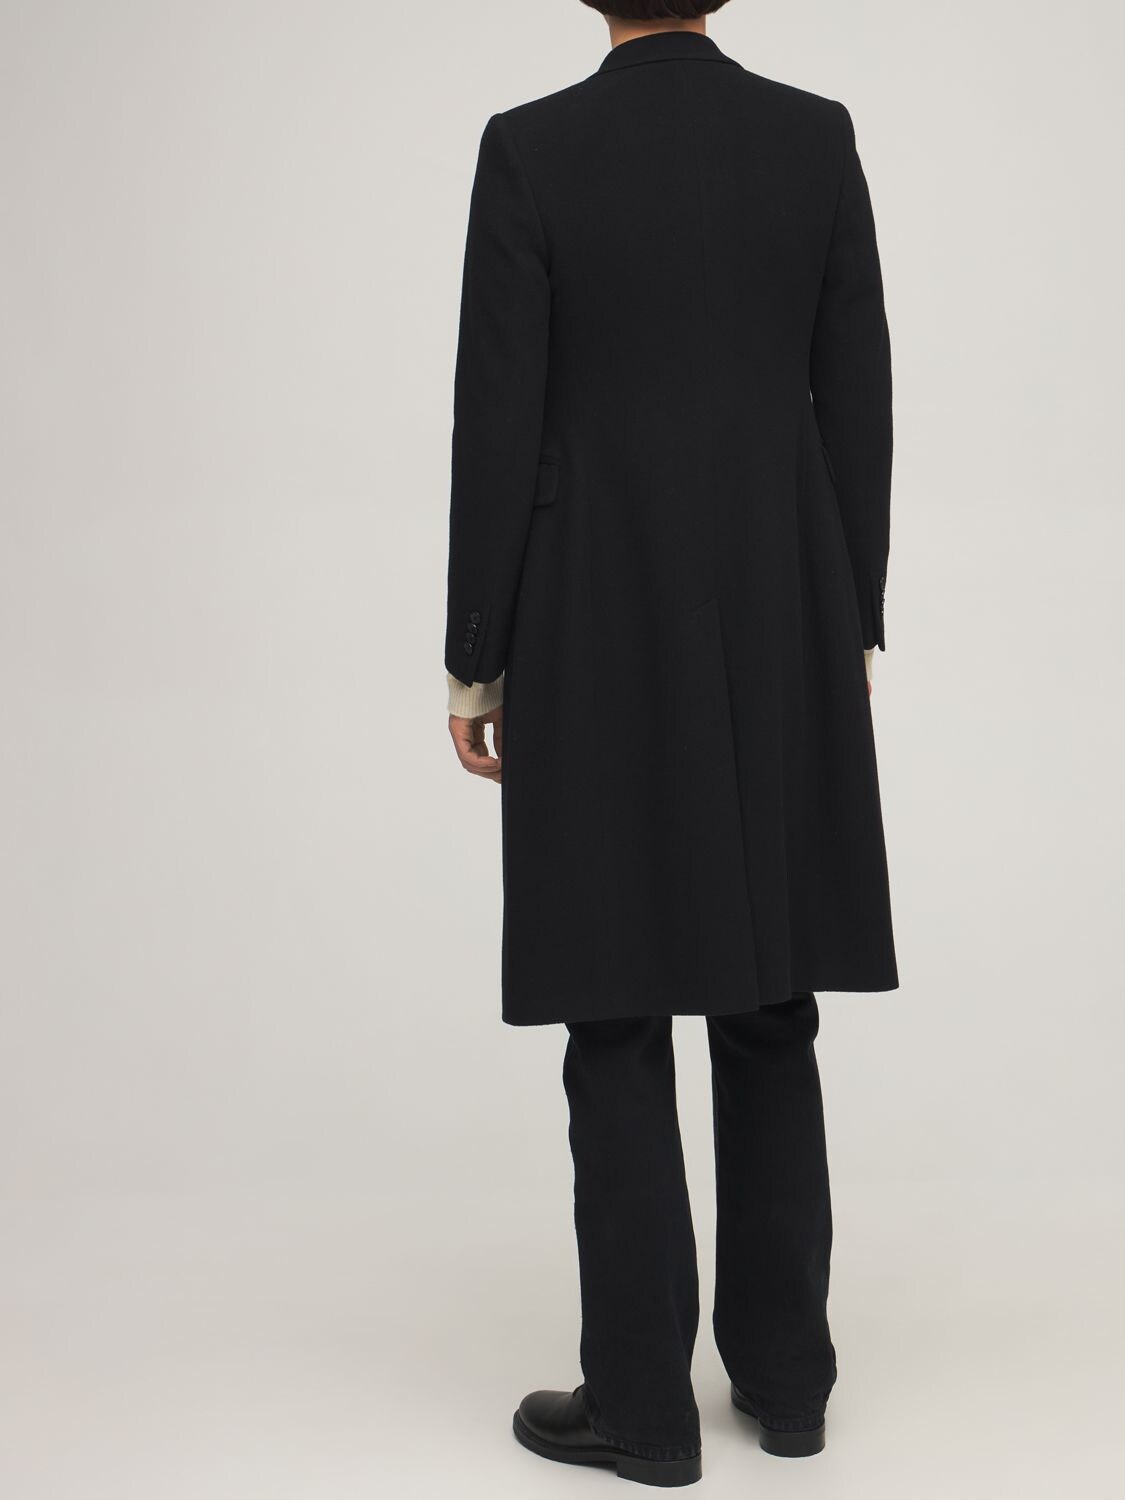 Tagliatore 0205 Zeudi Wool & Cashmere Single Breast Coat in Black Womens Clothing Coats Long coats and winter coats 